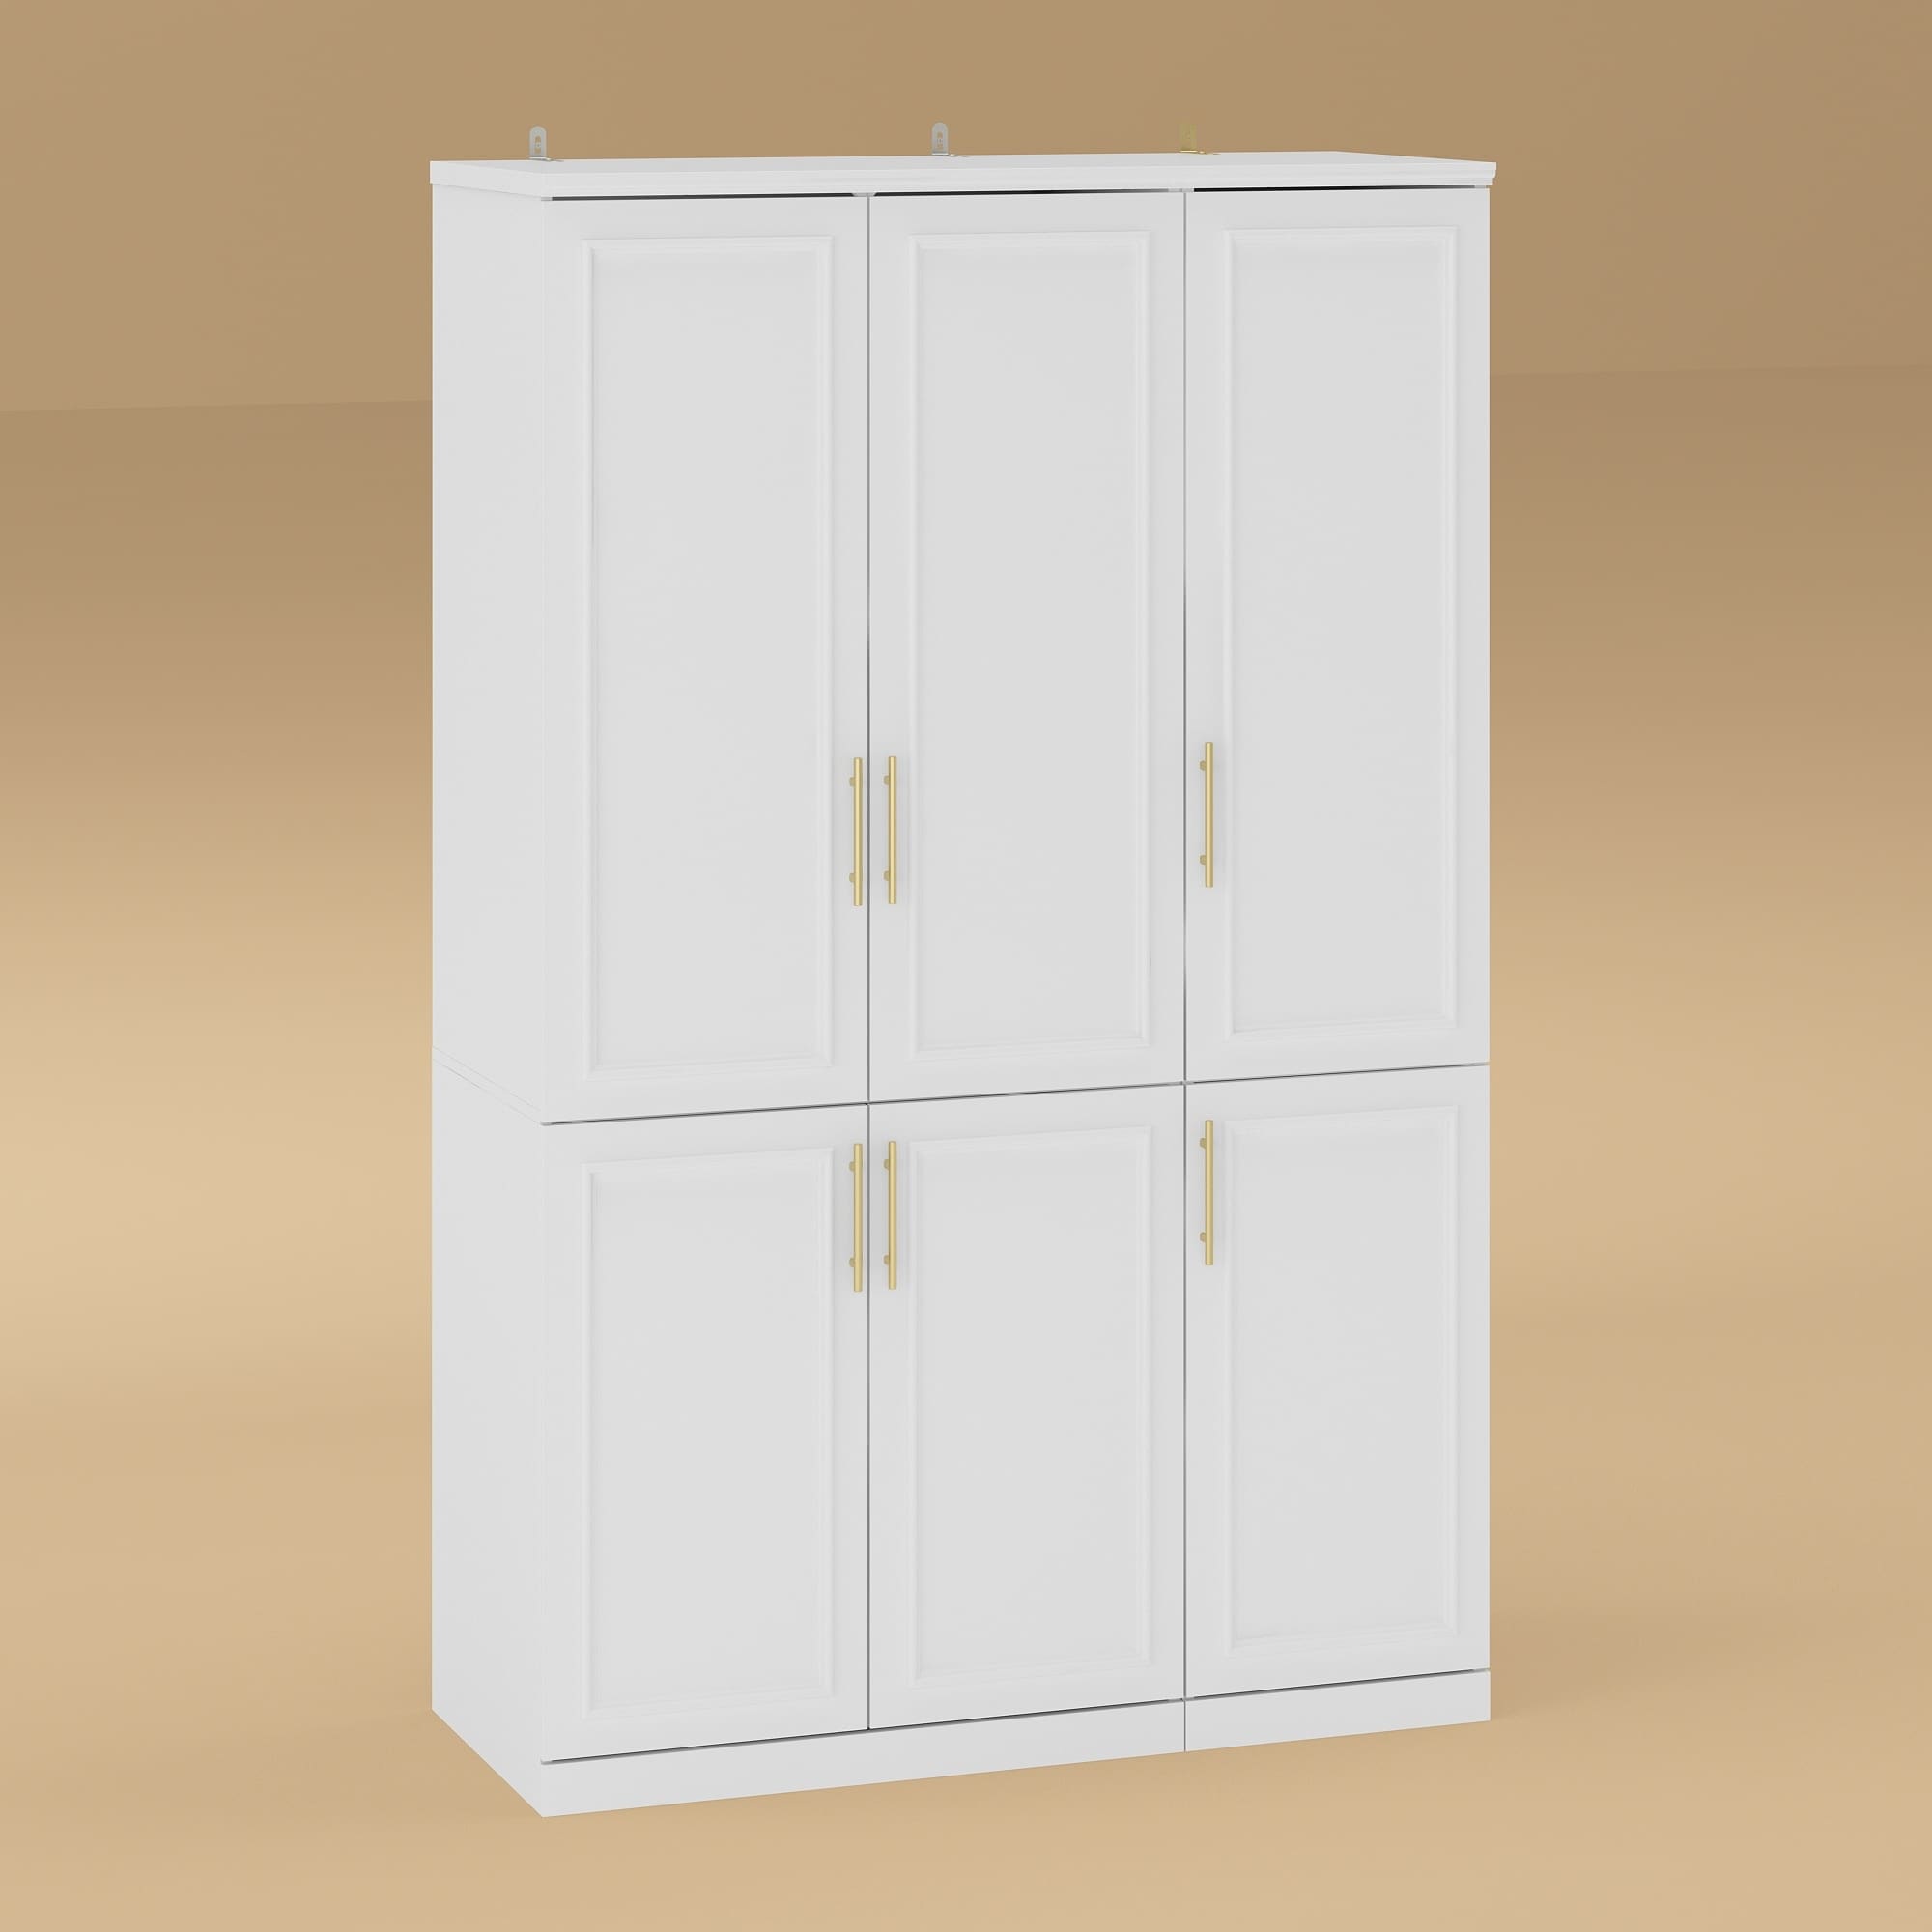 Corry Wardrobe Armoire Closet, Tall Storage Cabinet, White – 2kfurniture